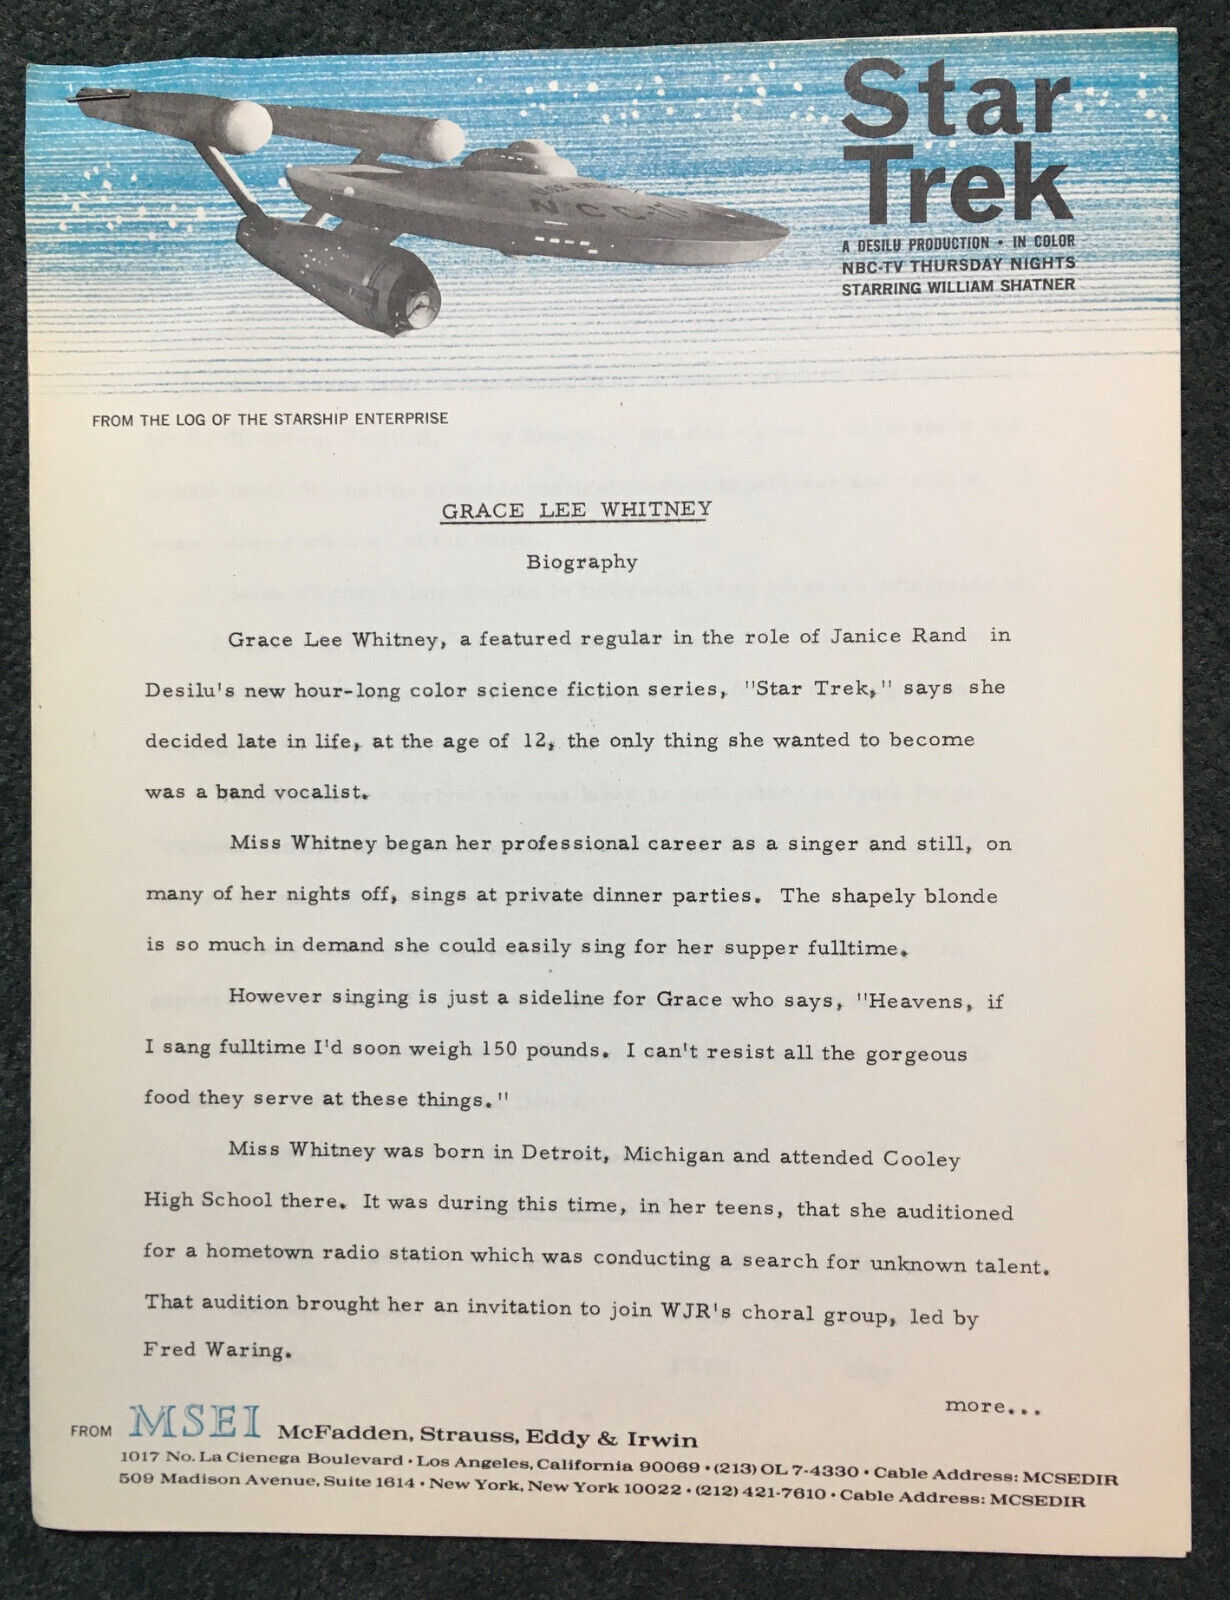 STAR TREK 1966 ORIGINAL 2-PAGE GRACE LEE WHITNEY BIOGRAPHY NBC-TV PRESS RELEASE